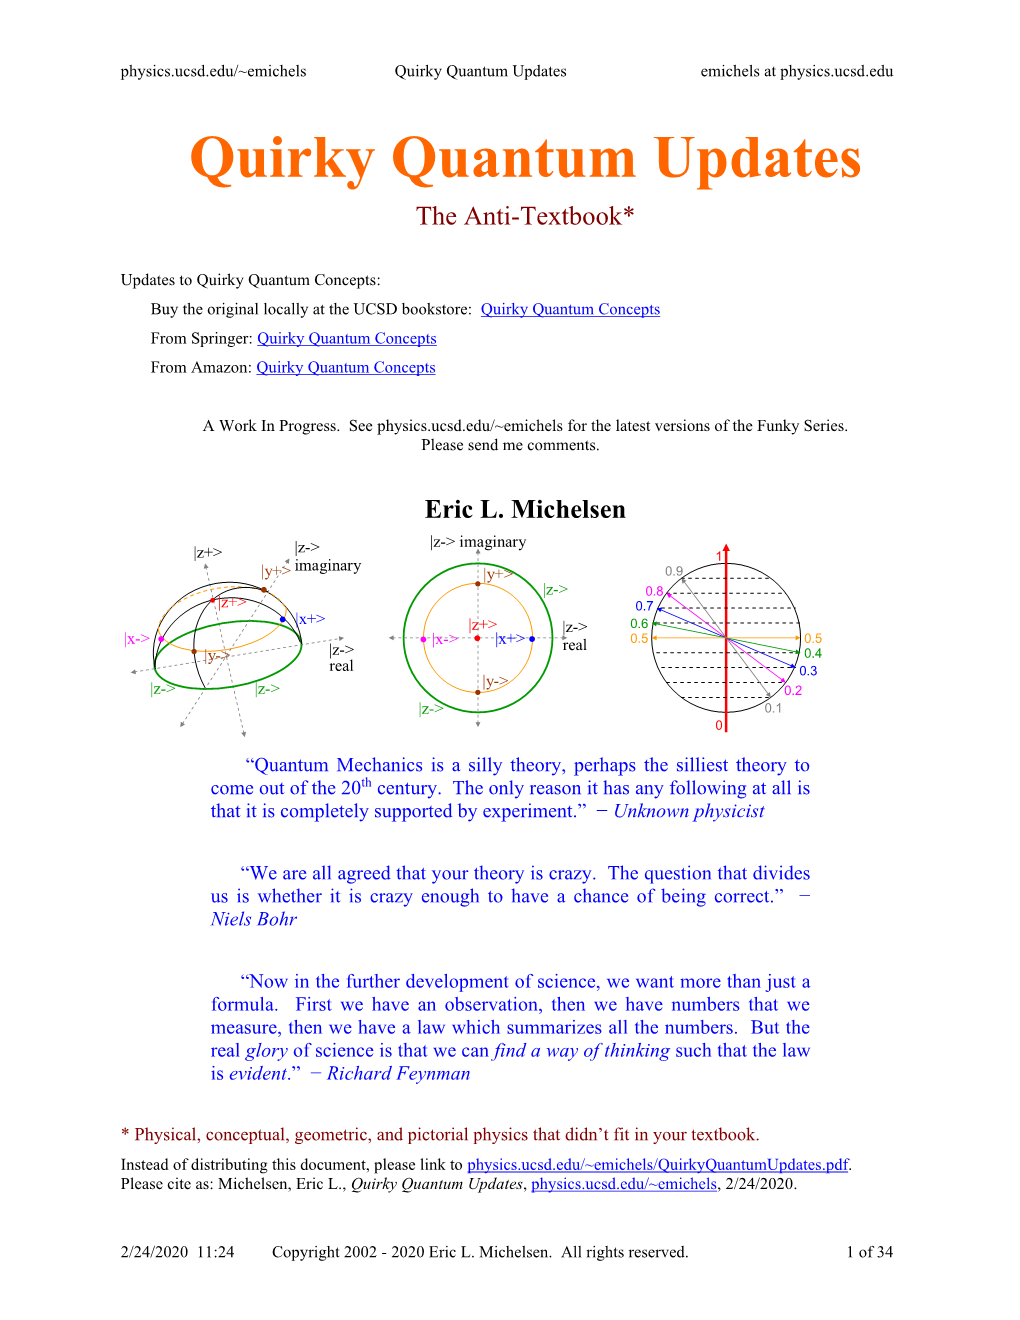 Quirky Quantum Updates Emichels at Physics.Ucsd.Edu